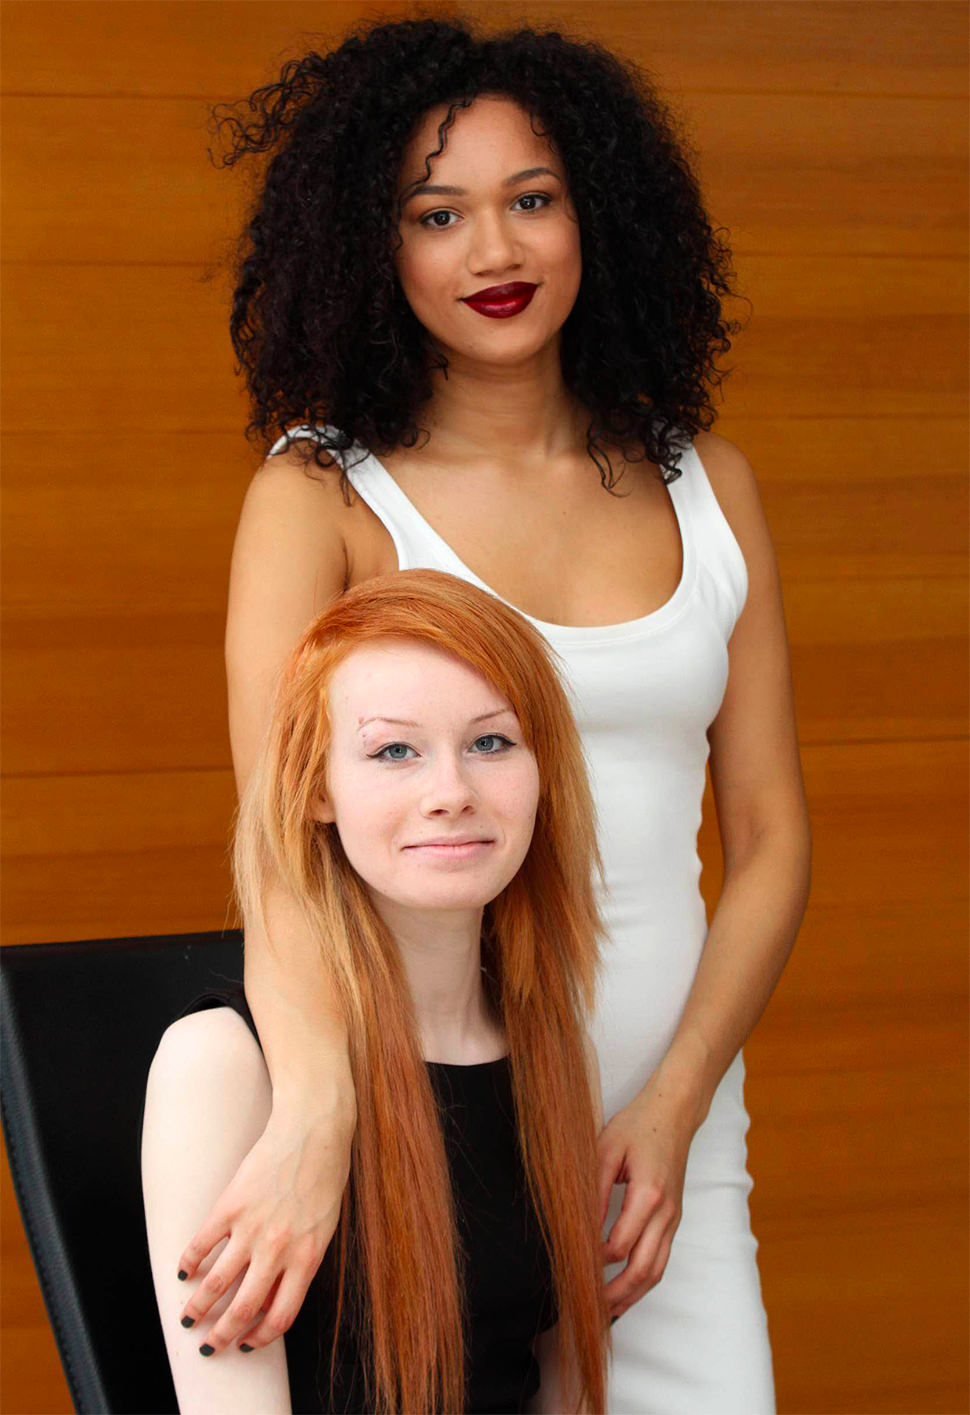 Génetica interracial: dos hermanas mellizas